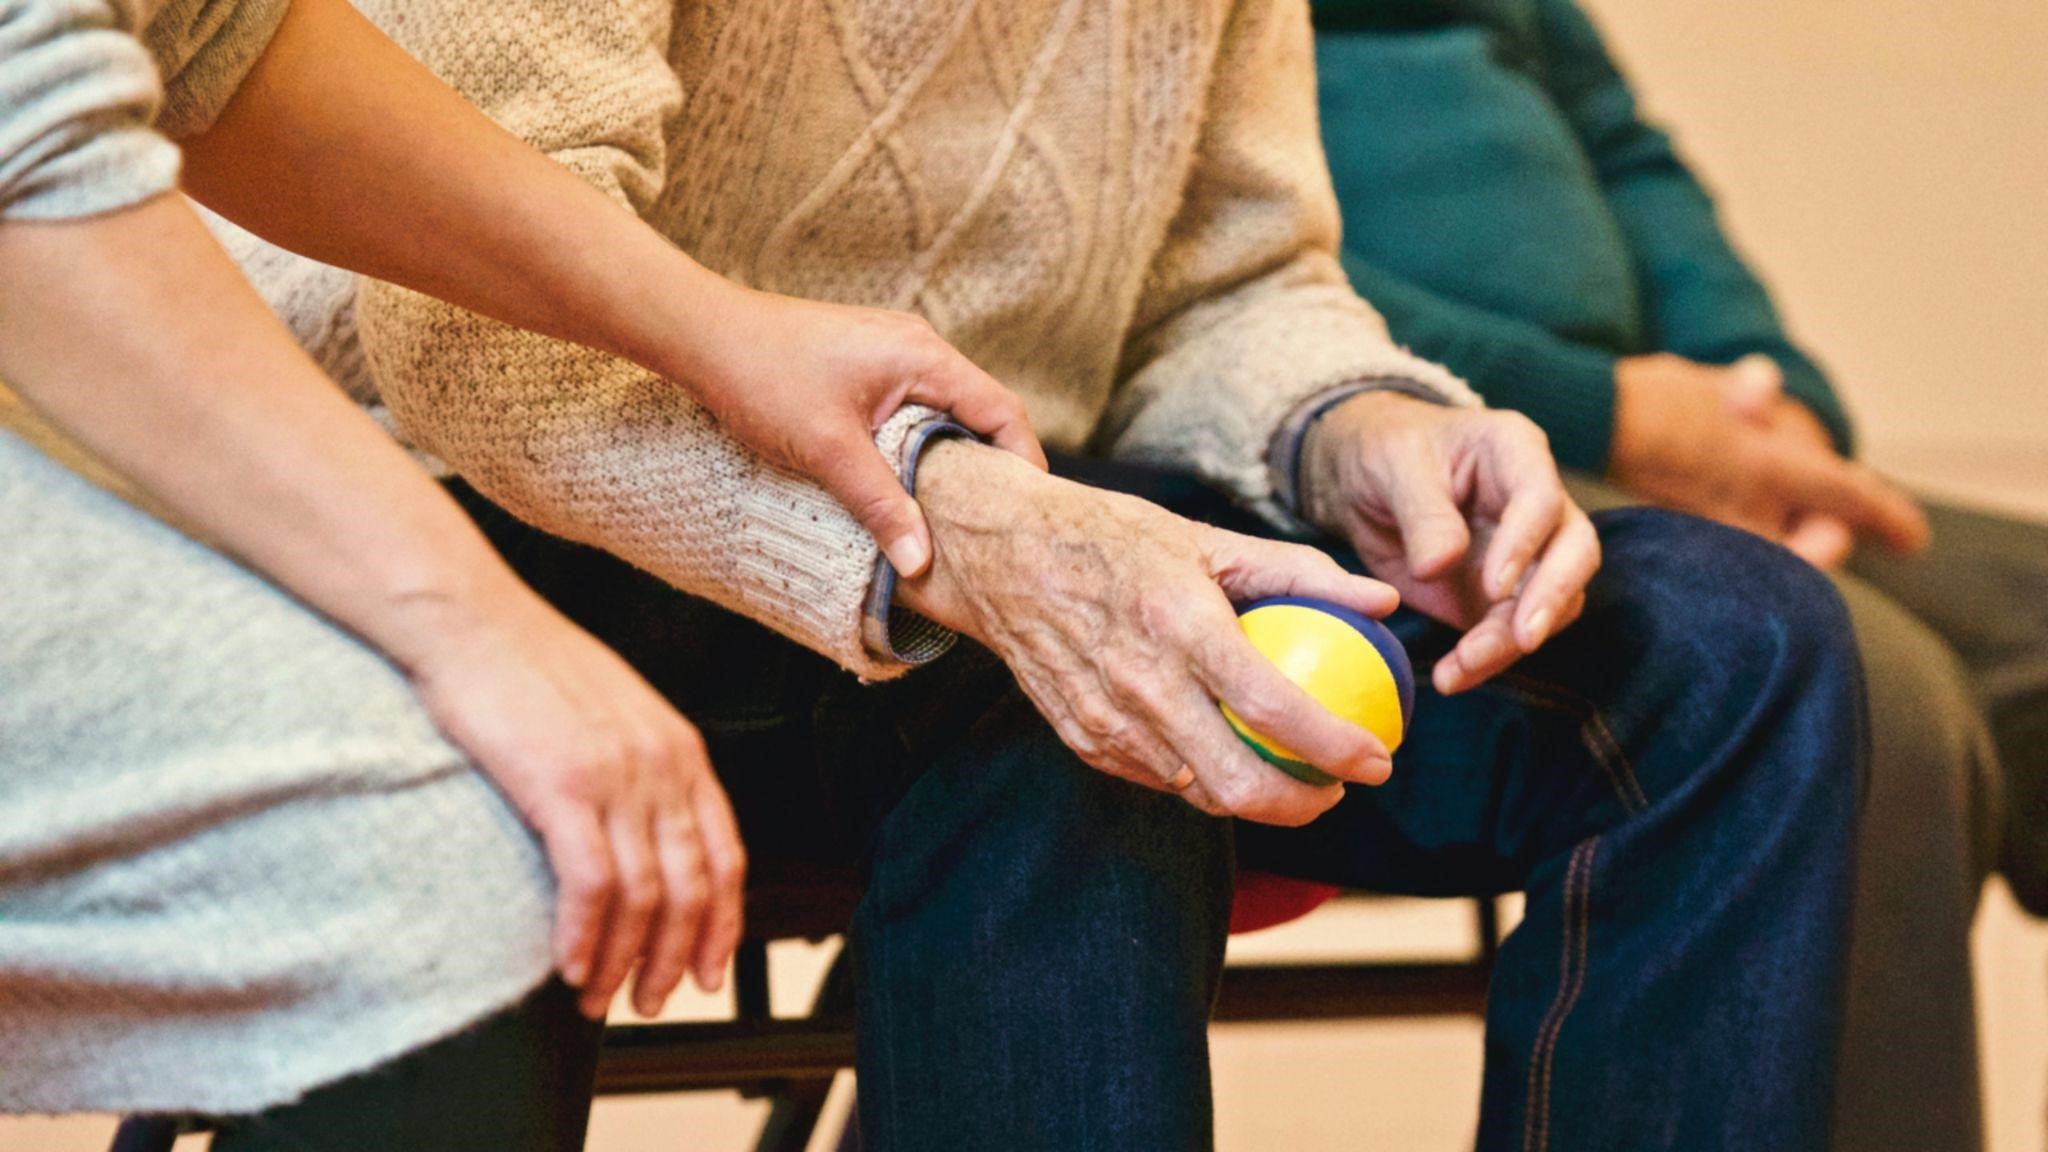 Why Hire an On-demand Senior Caregiver